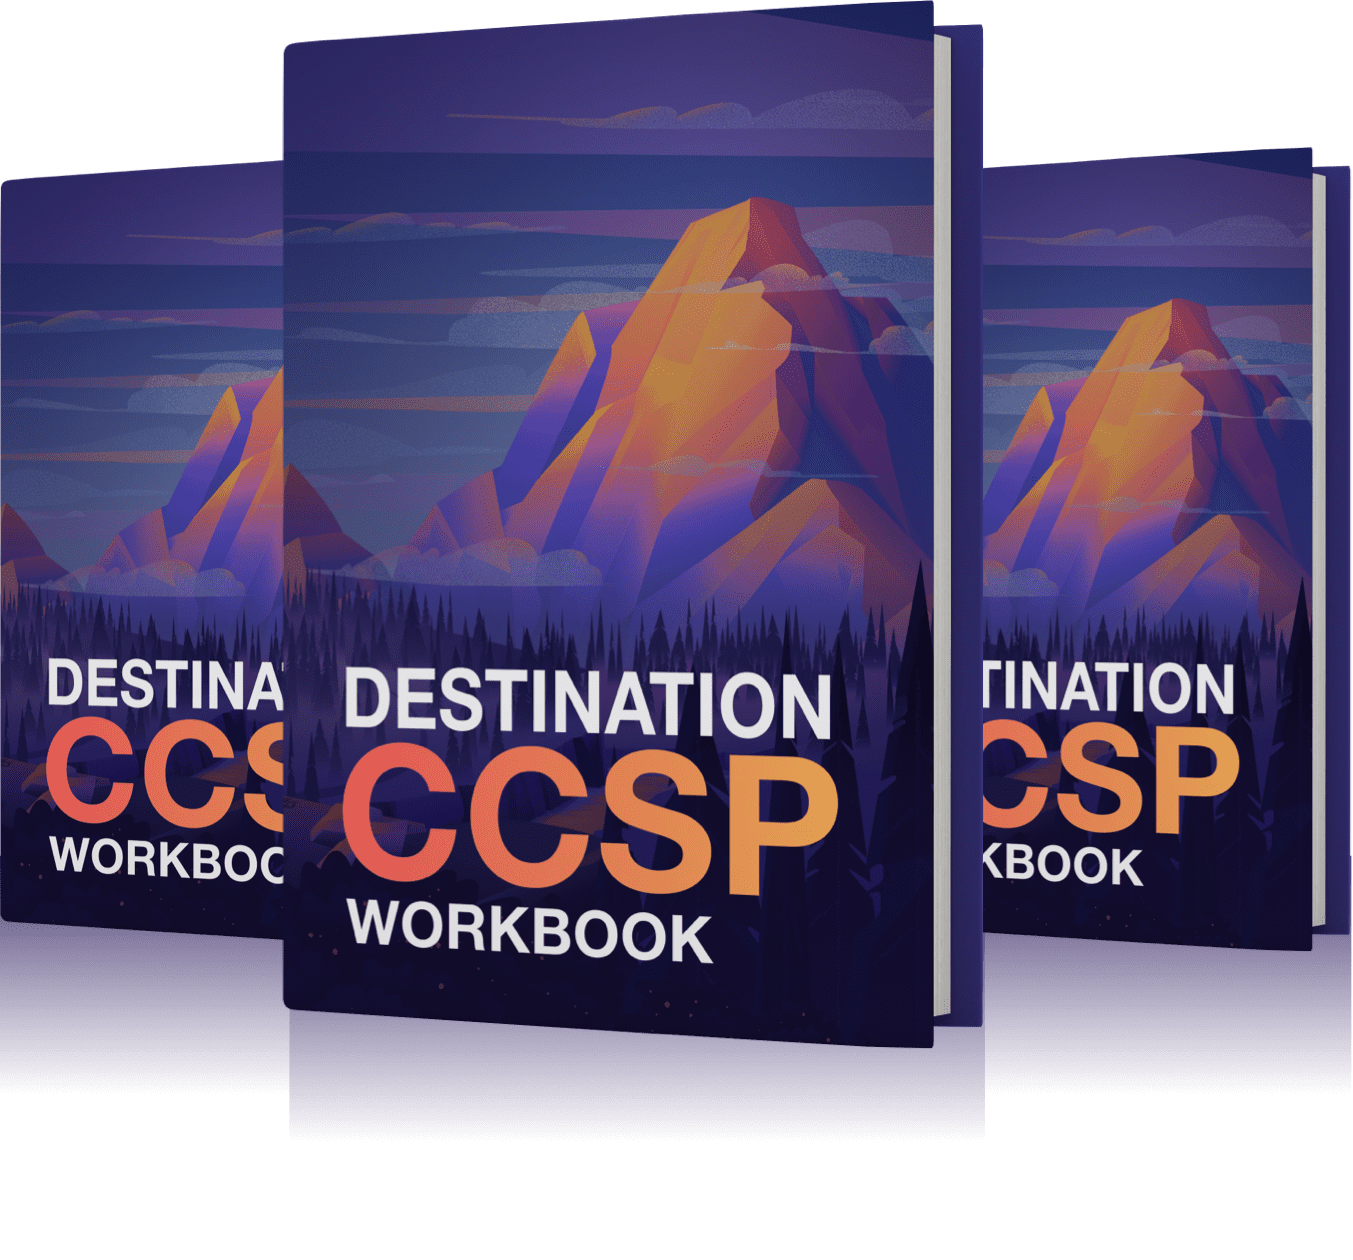 Image of 3 CCSP workbooks - Destination Certification